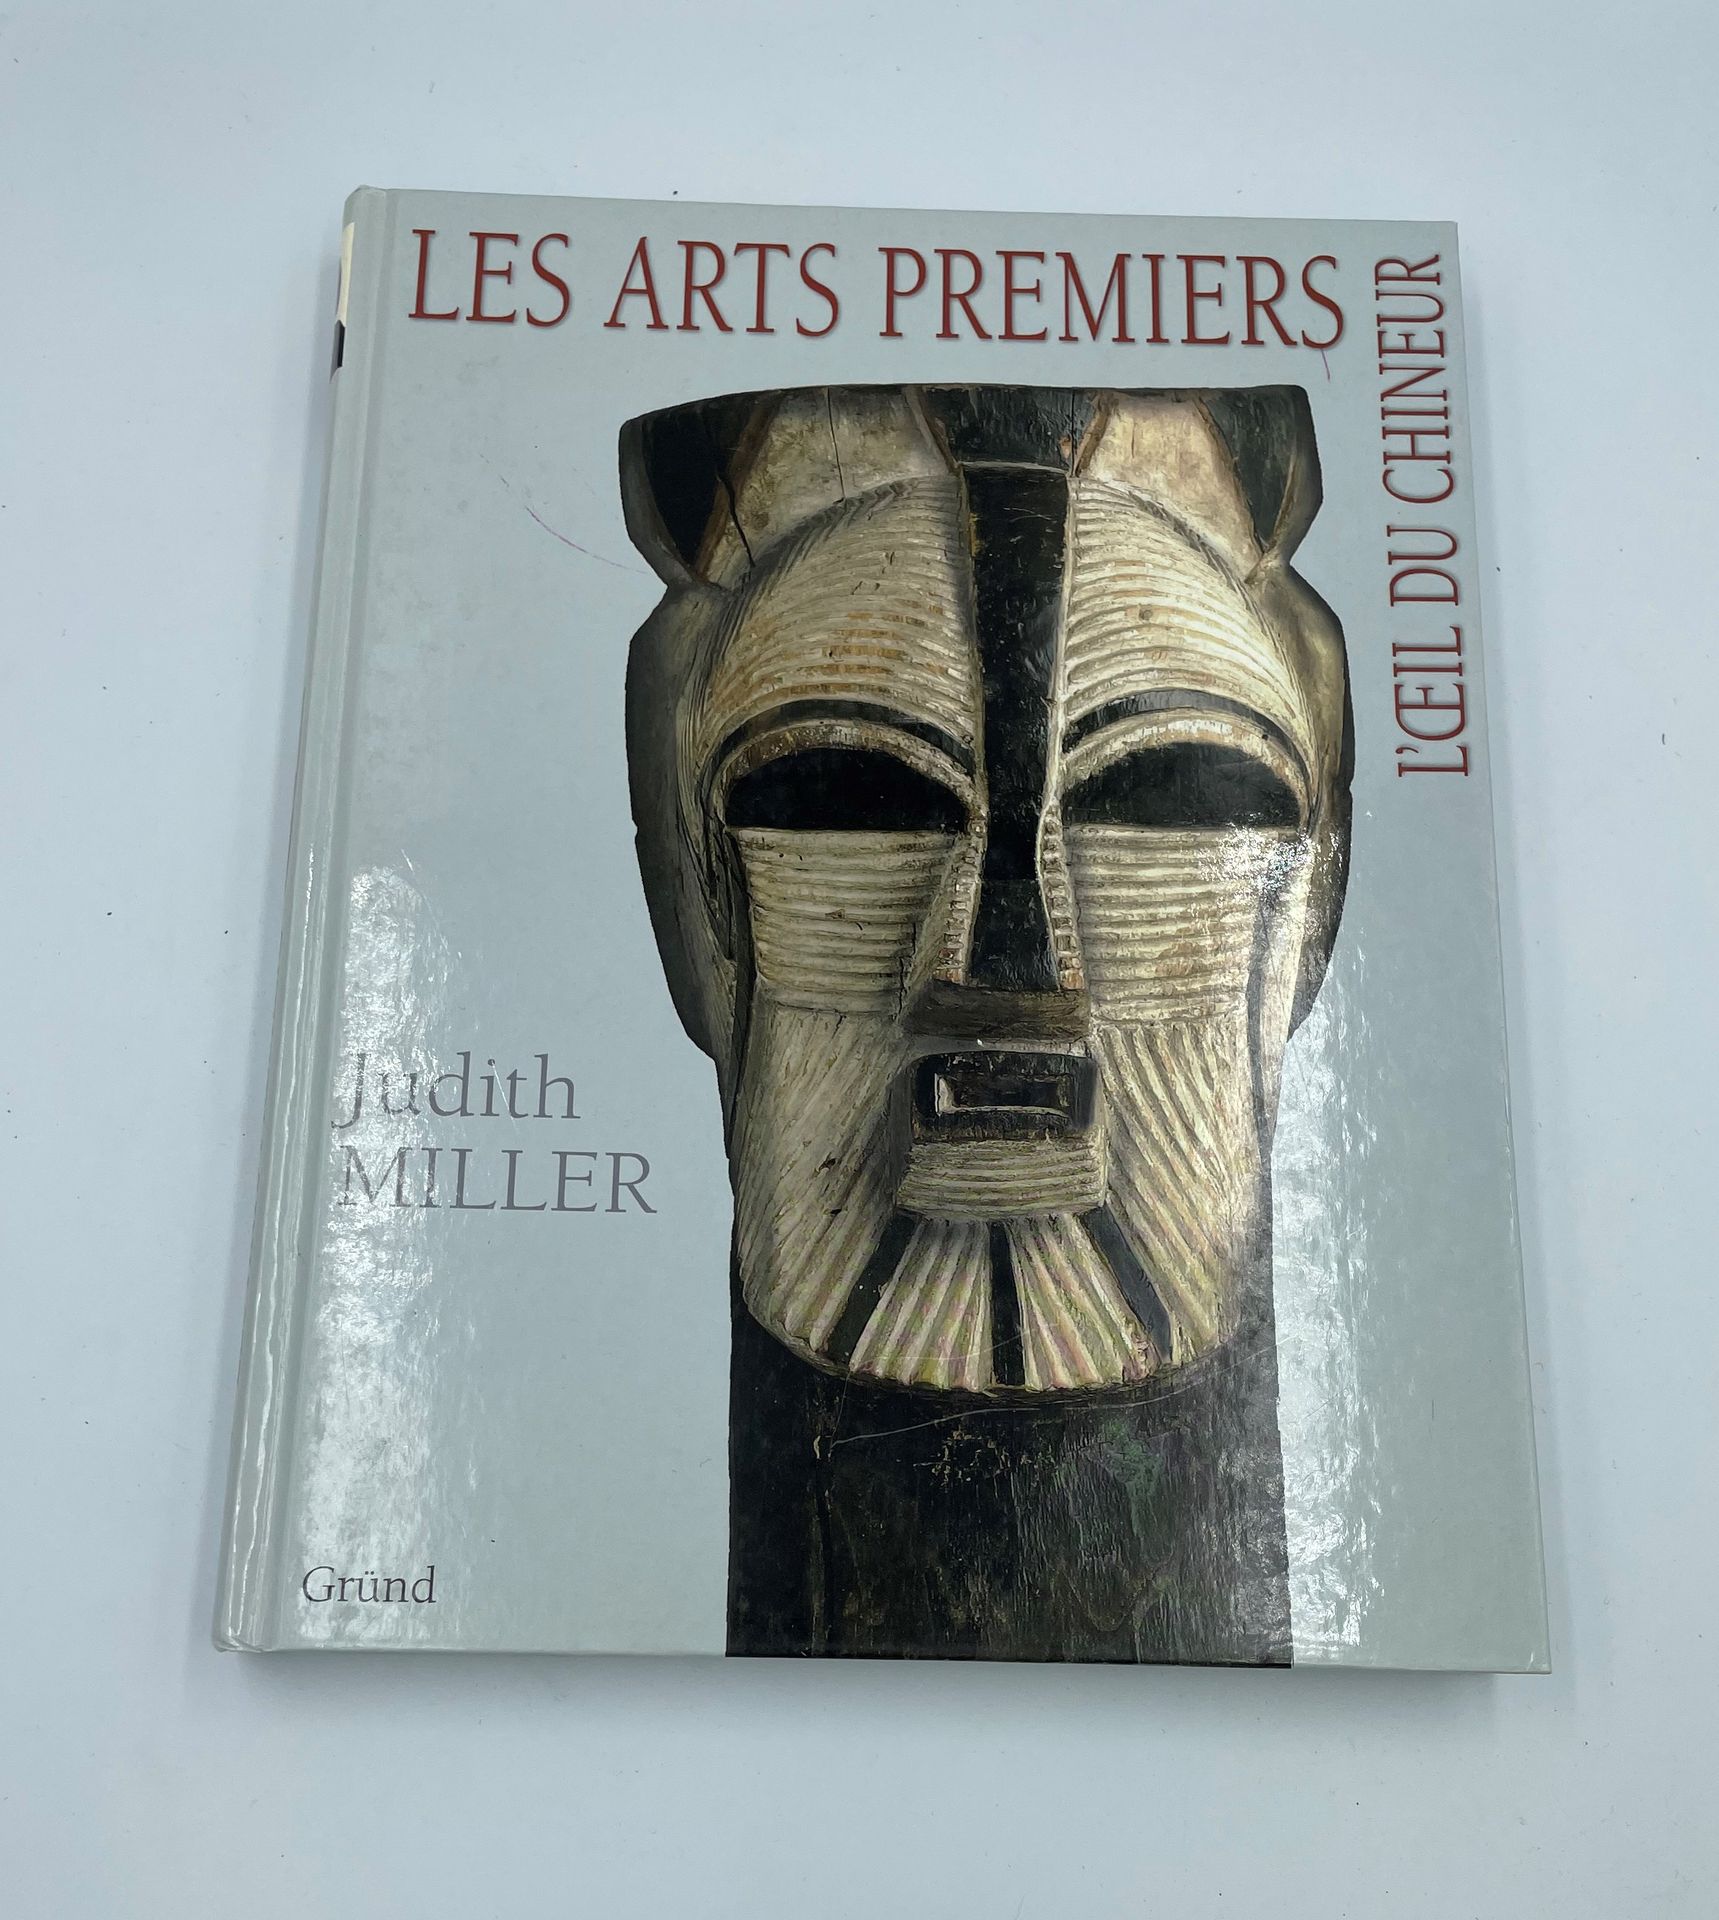 Null GRUND, J. MILLER, L'occhio del cacciatore, Les arts premiers, 2007